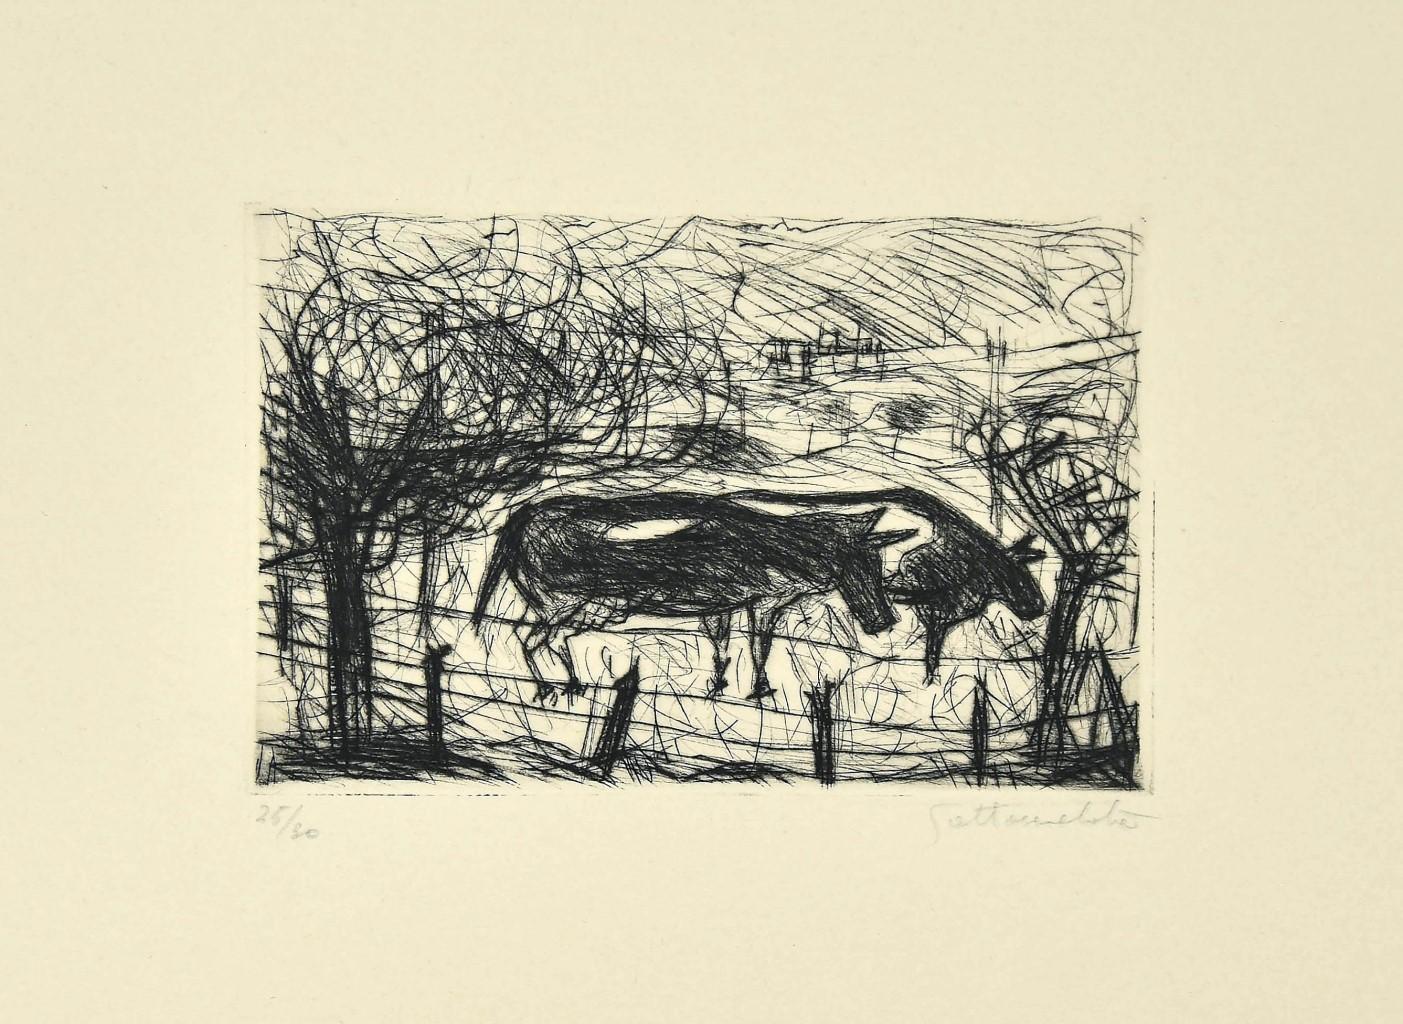 Nazareno Gattamenata Figurative Print - Cows - Original Etching by Nazareno Gattamelata - Late 20th Century